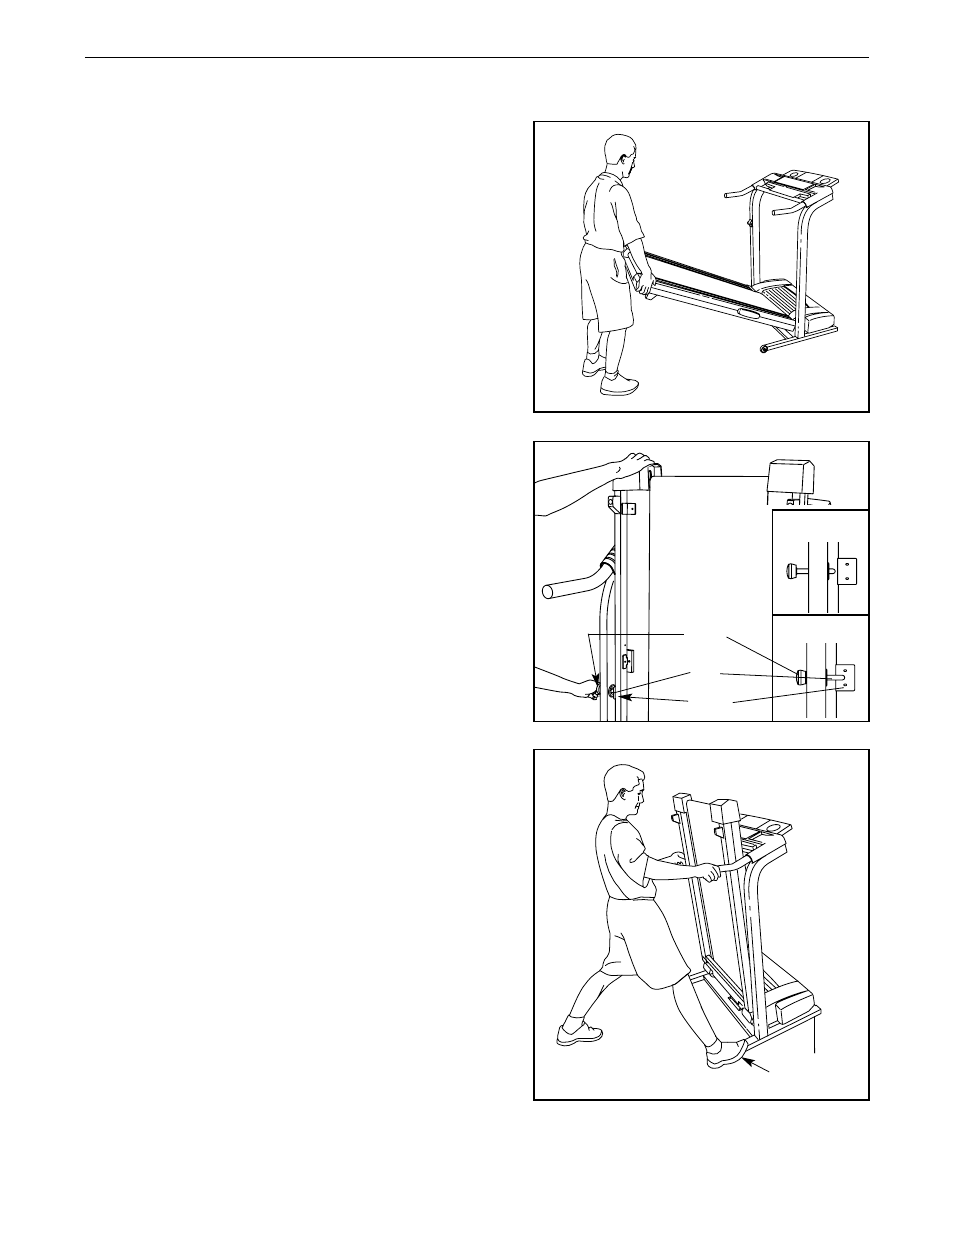 how-to-fold-and-move-the-treadmill-image-10-0-treadmill-imtl39620